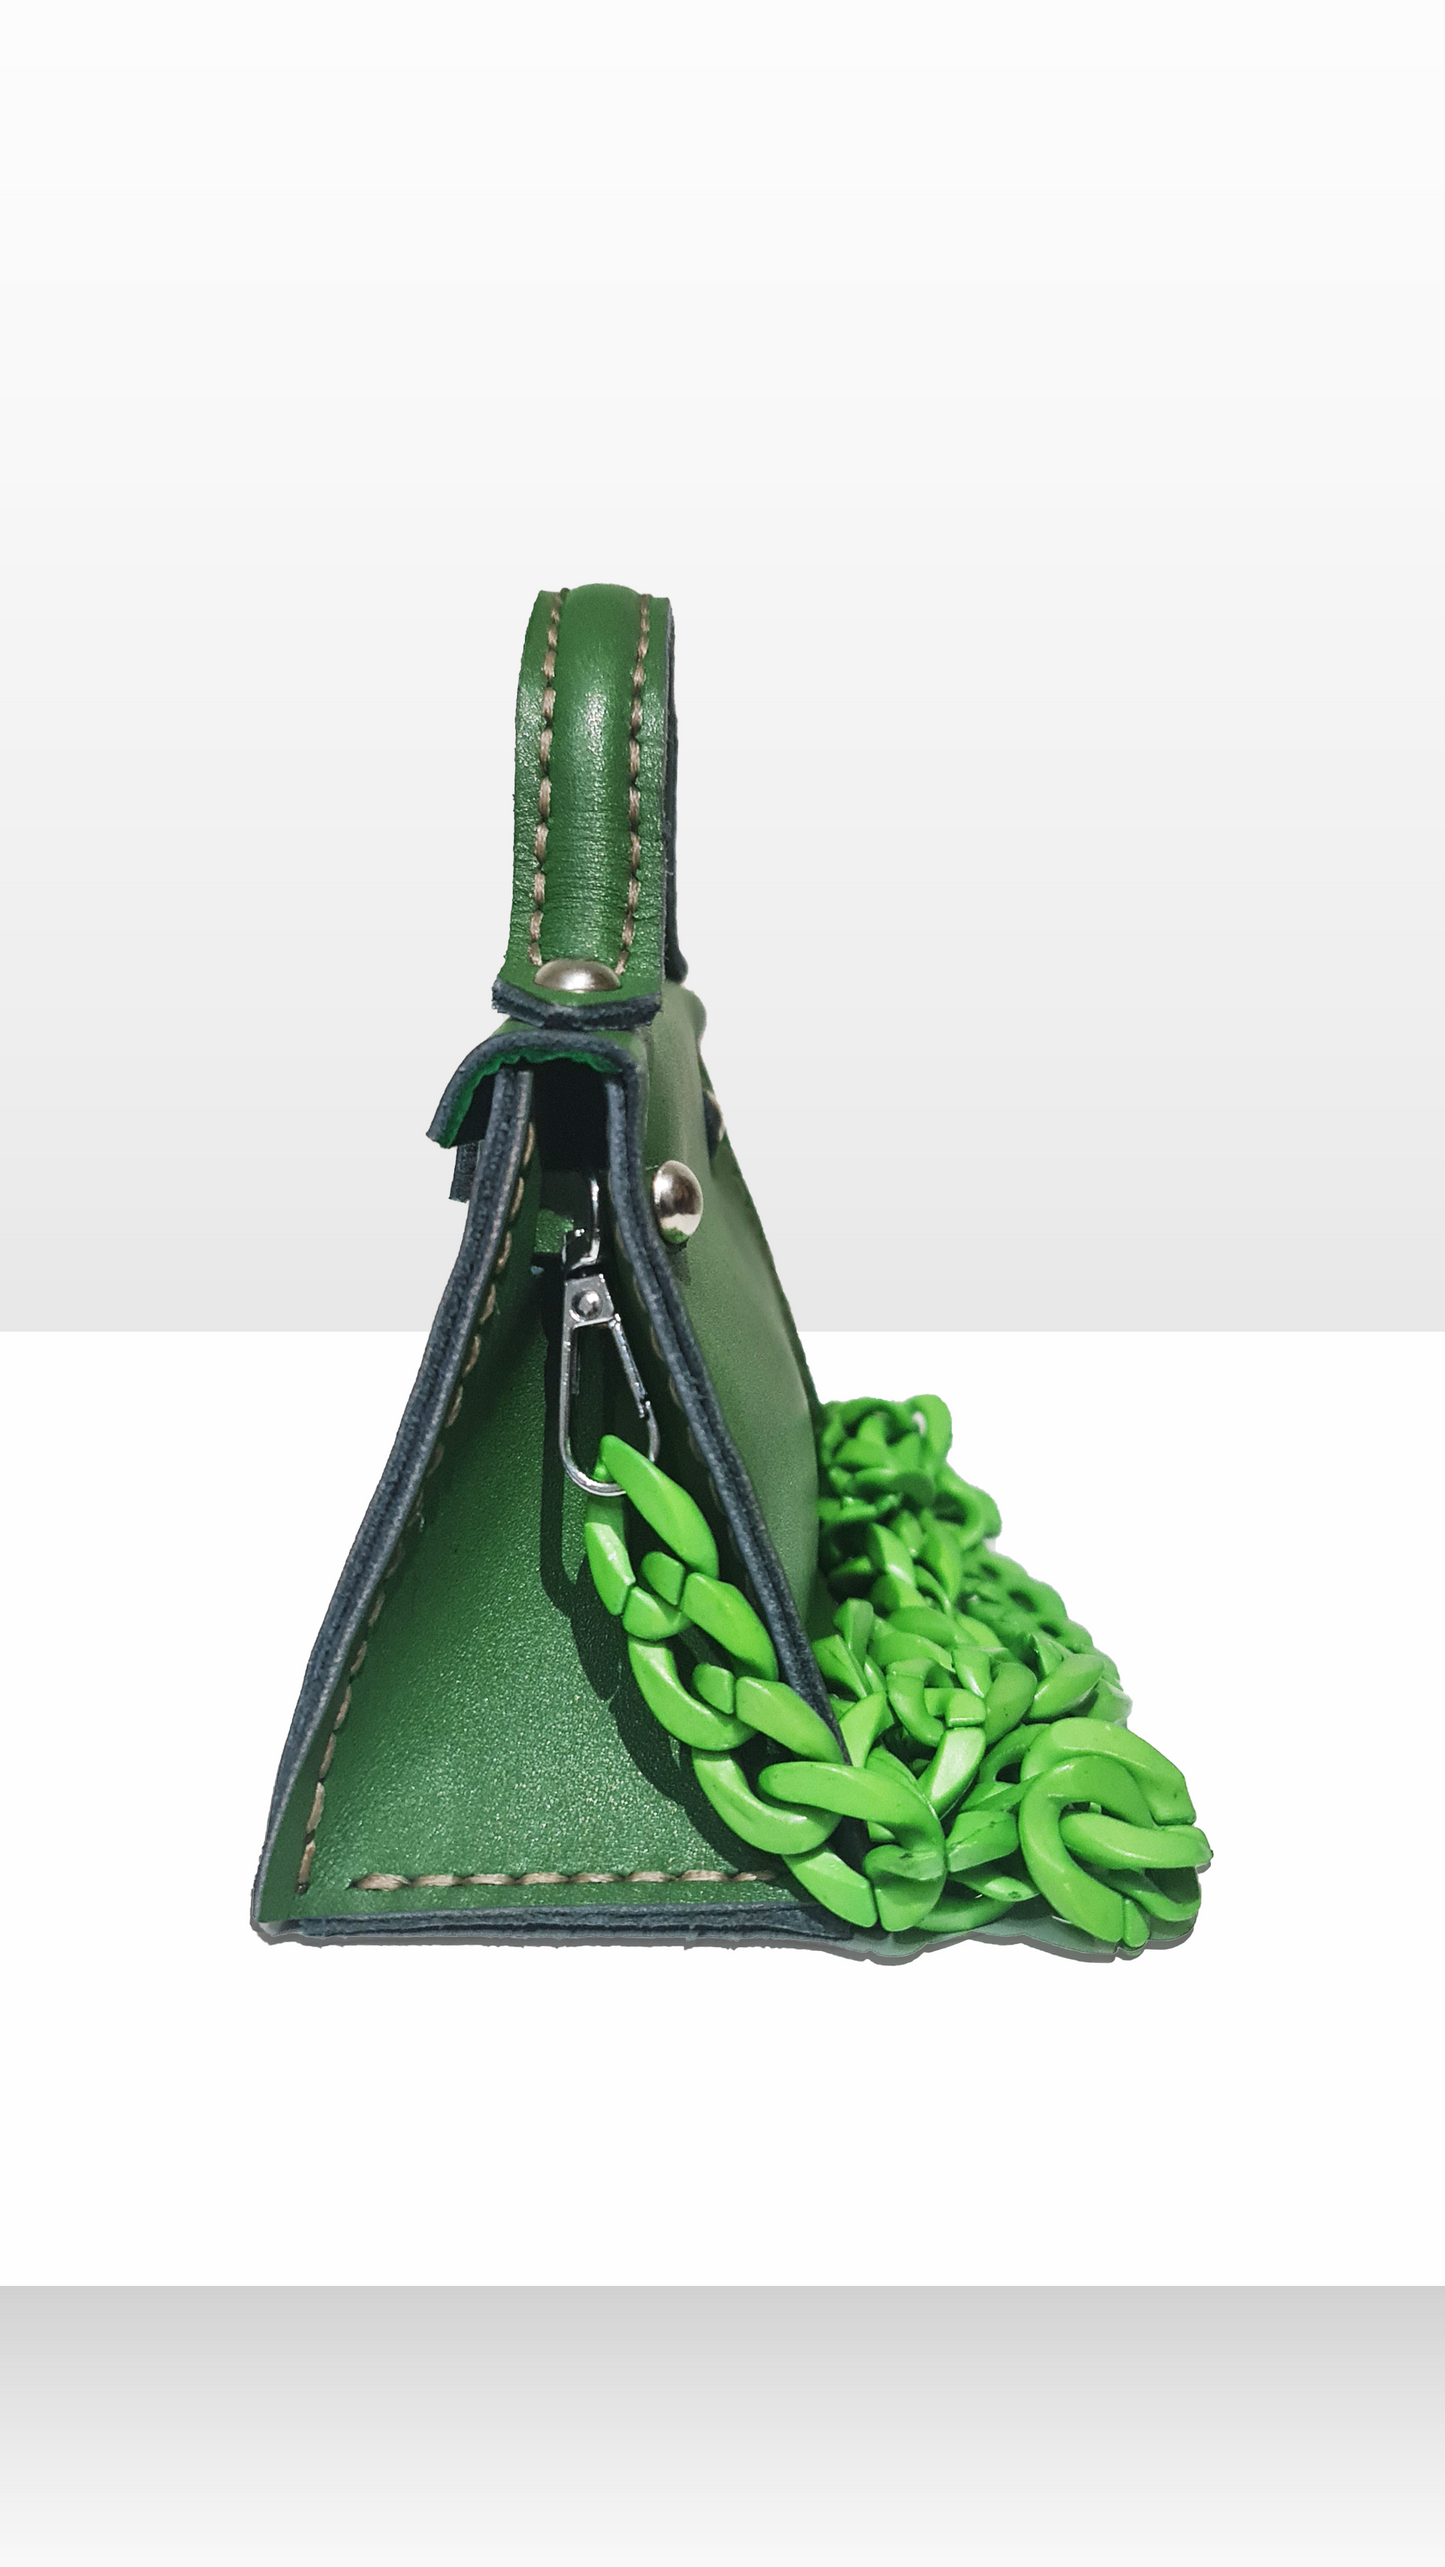 Mini green bag with a plastic chain